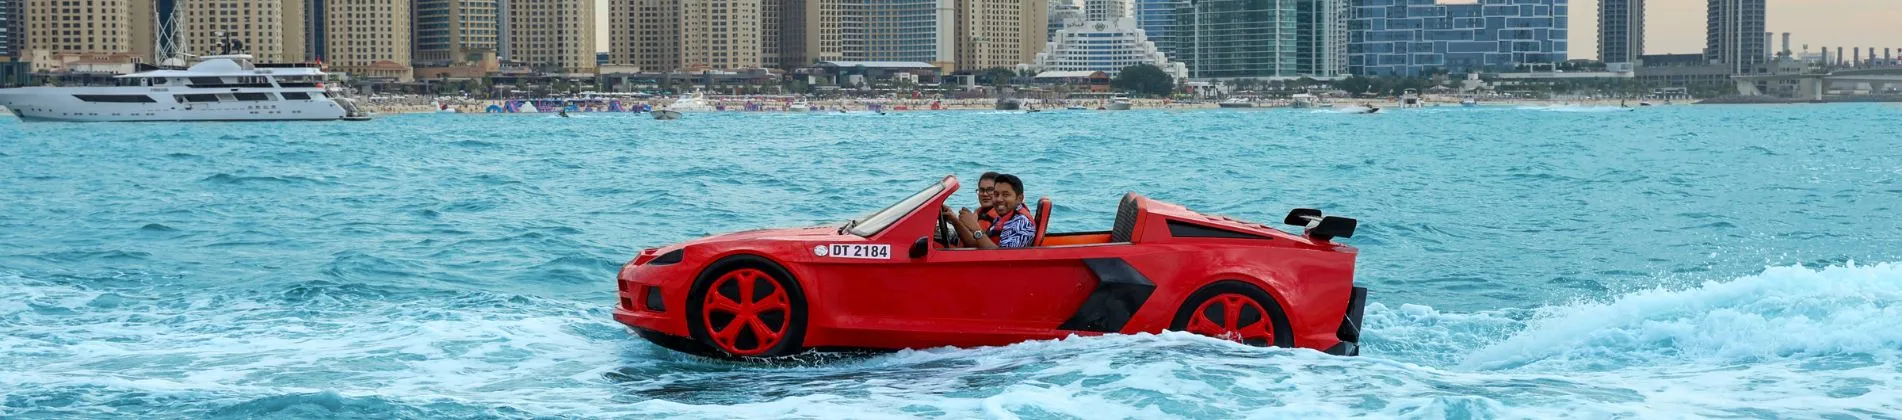 Best Jet Car Ride in Dubai